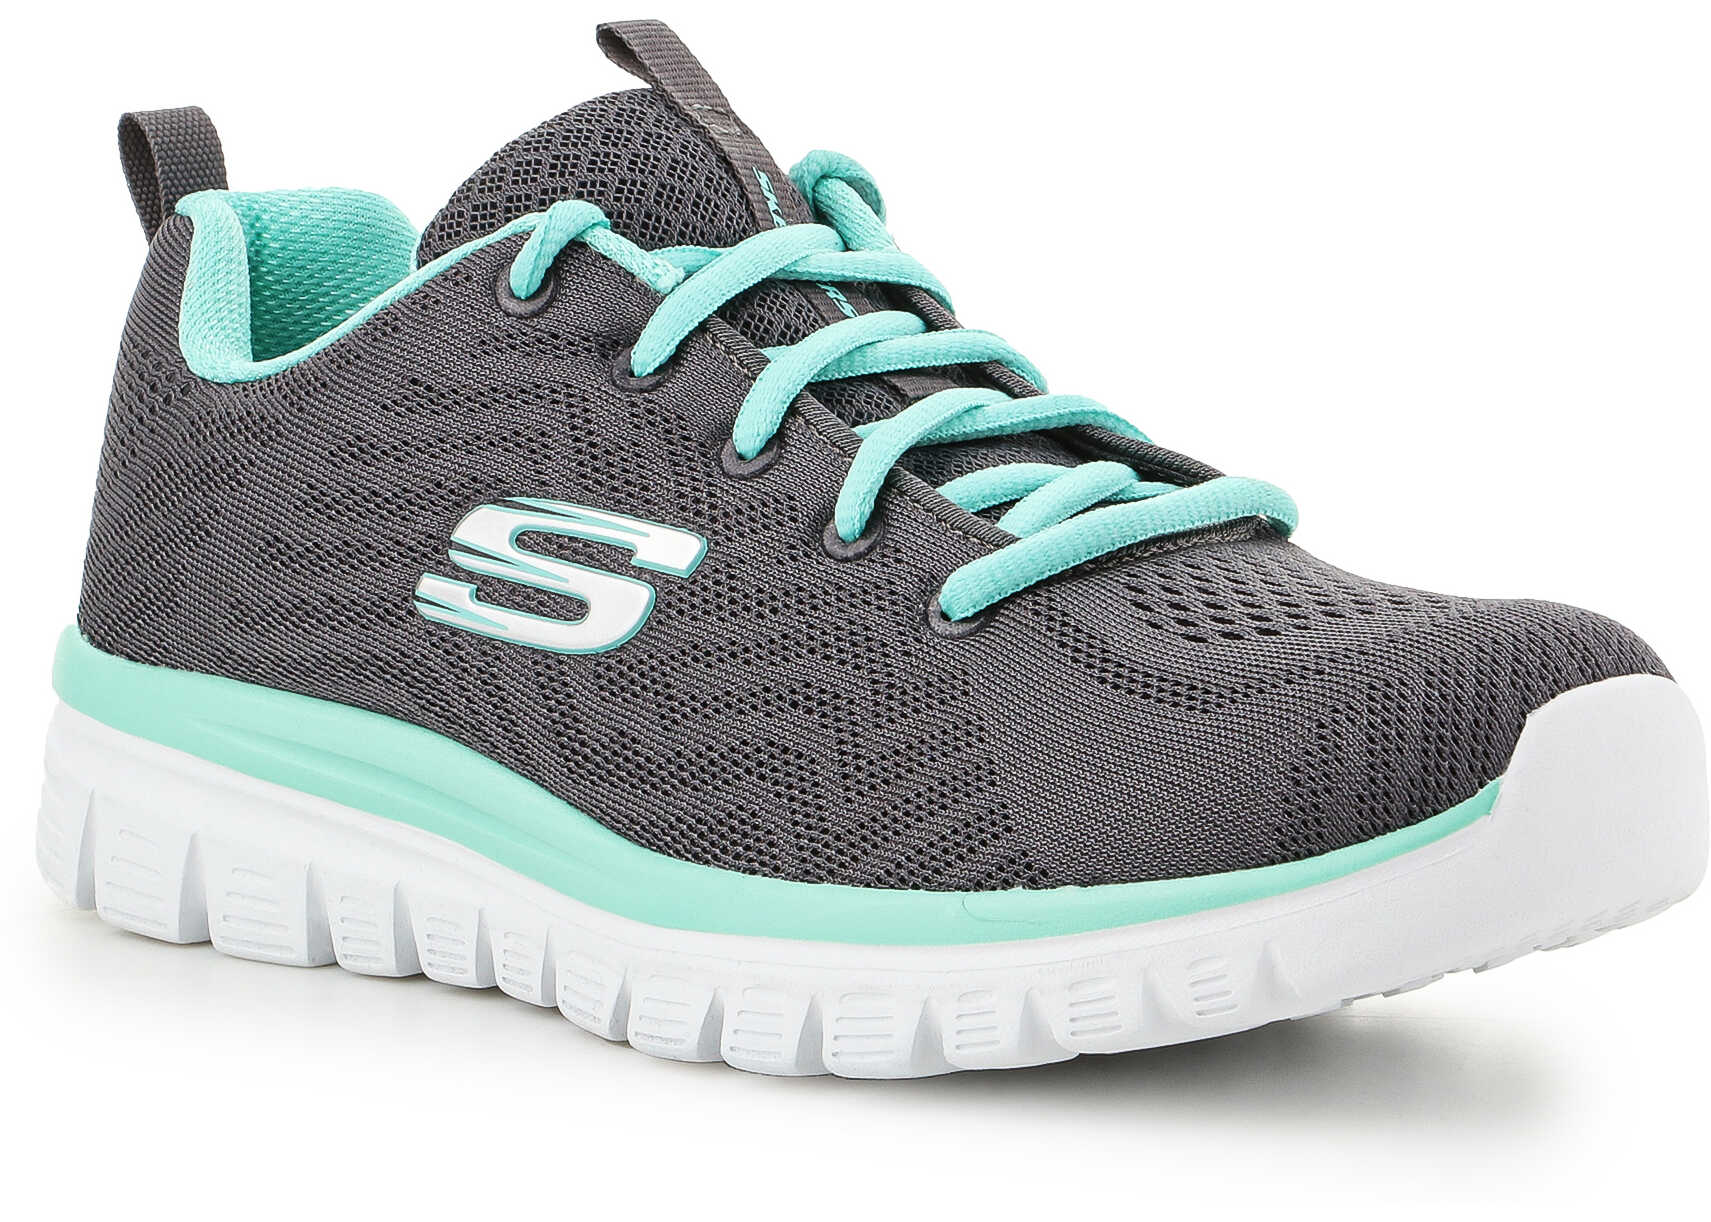 SKECHERS Sports shoes 12615 – CCGR Grey/Mint b-mall.ro